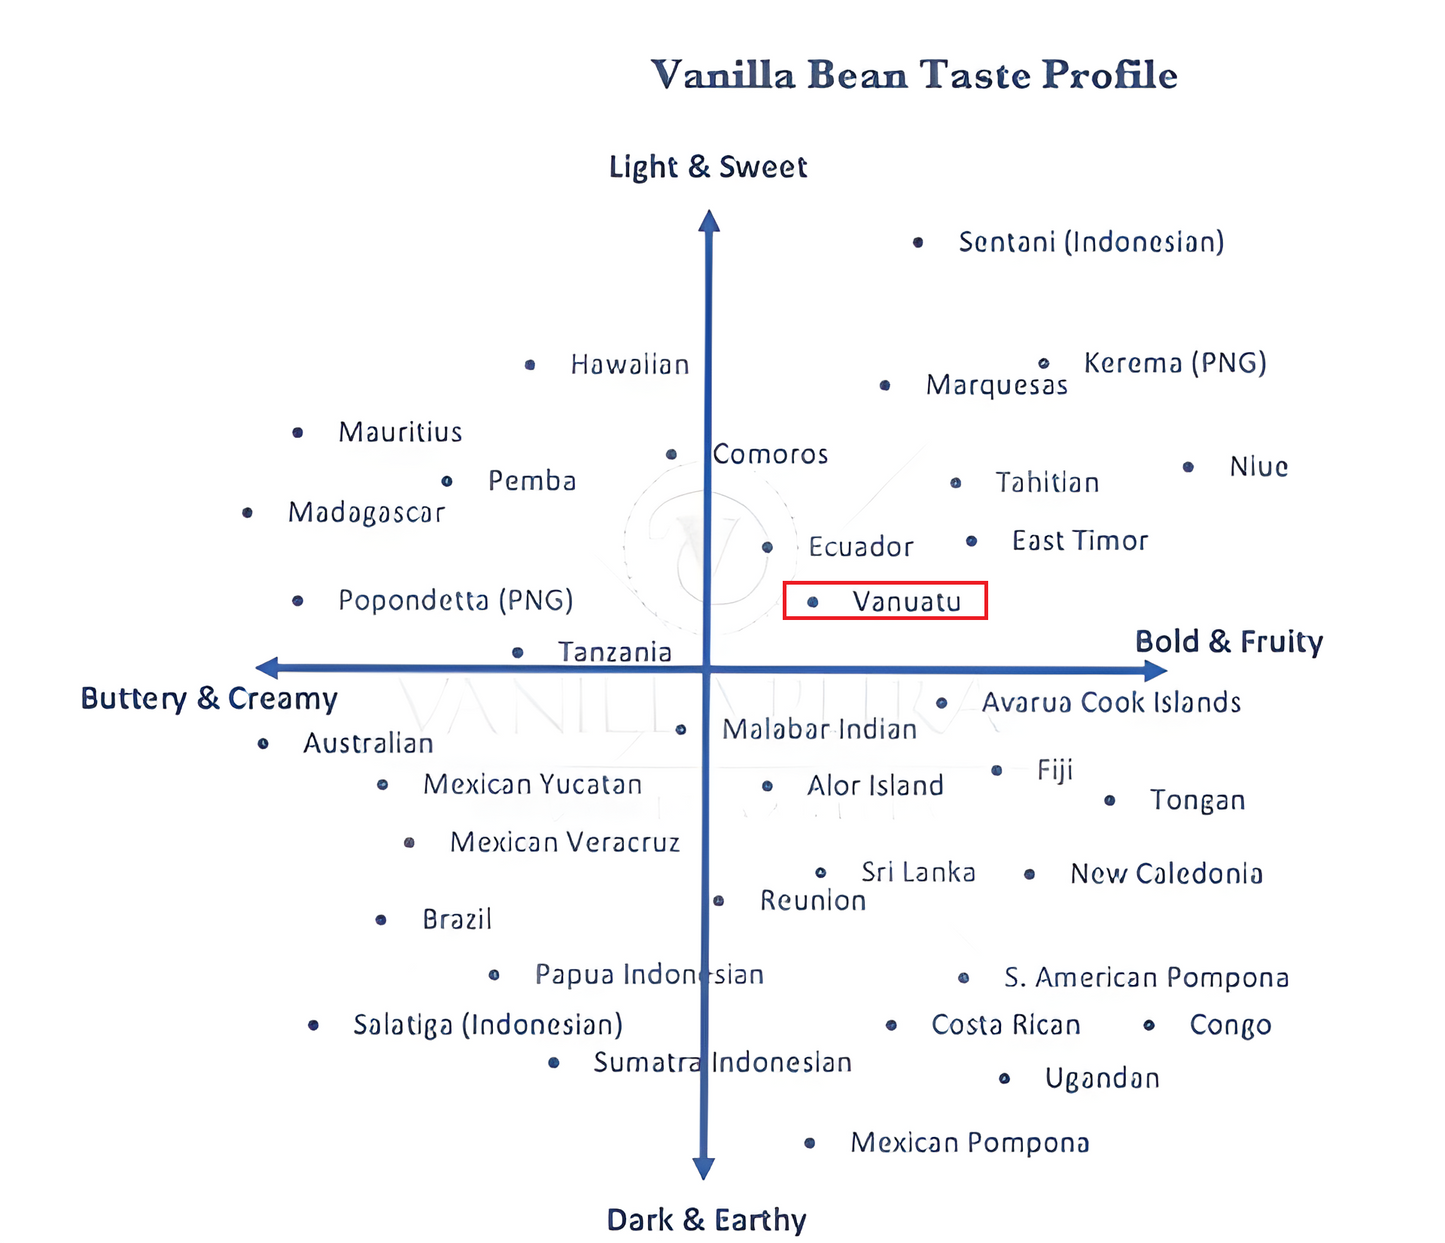 [WITH BEANS] Pure All-Natural VANUATU Single-Origin Vanilla Extract